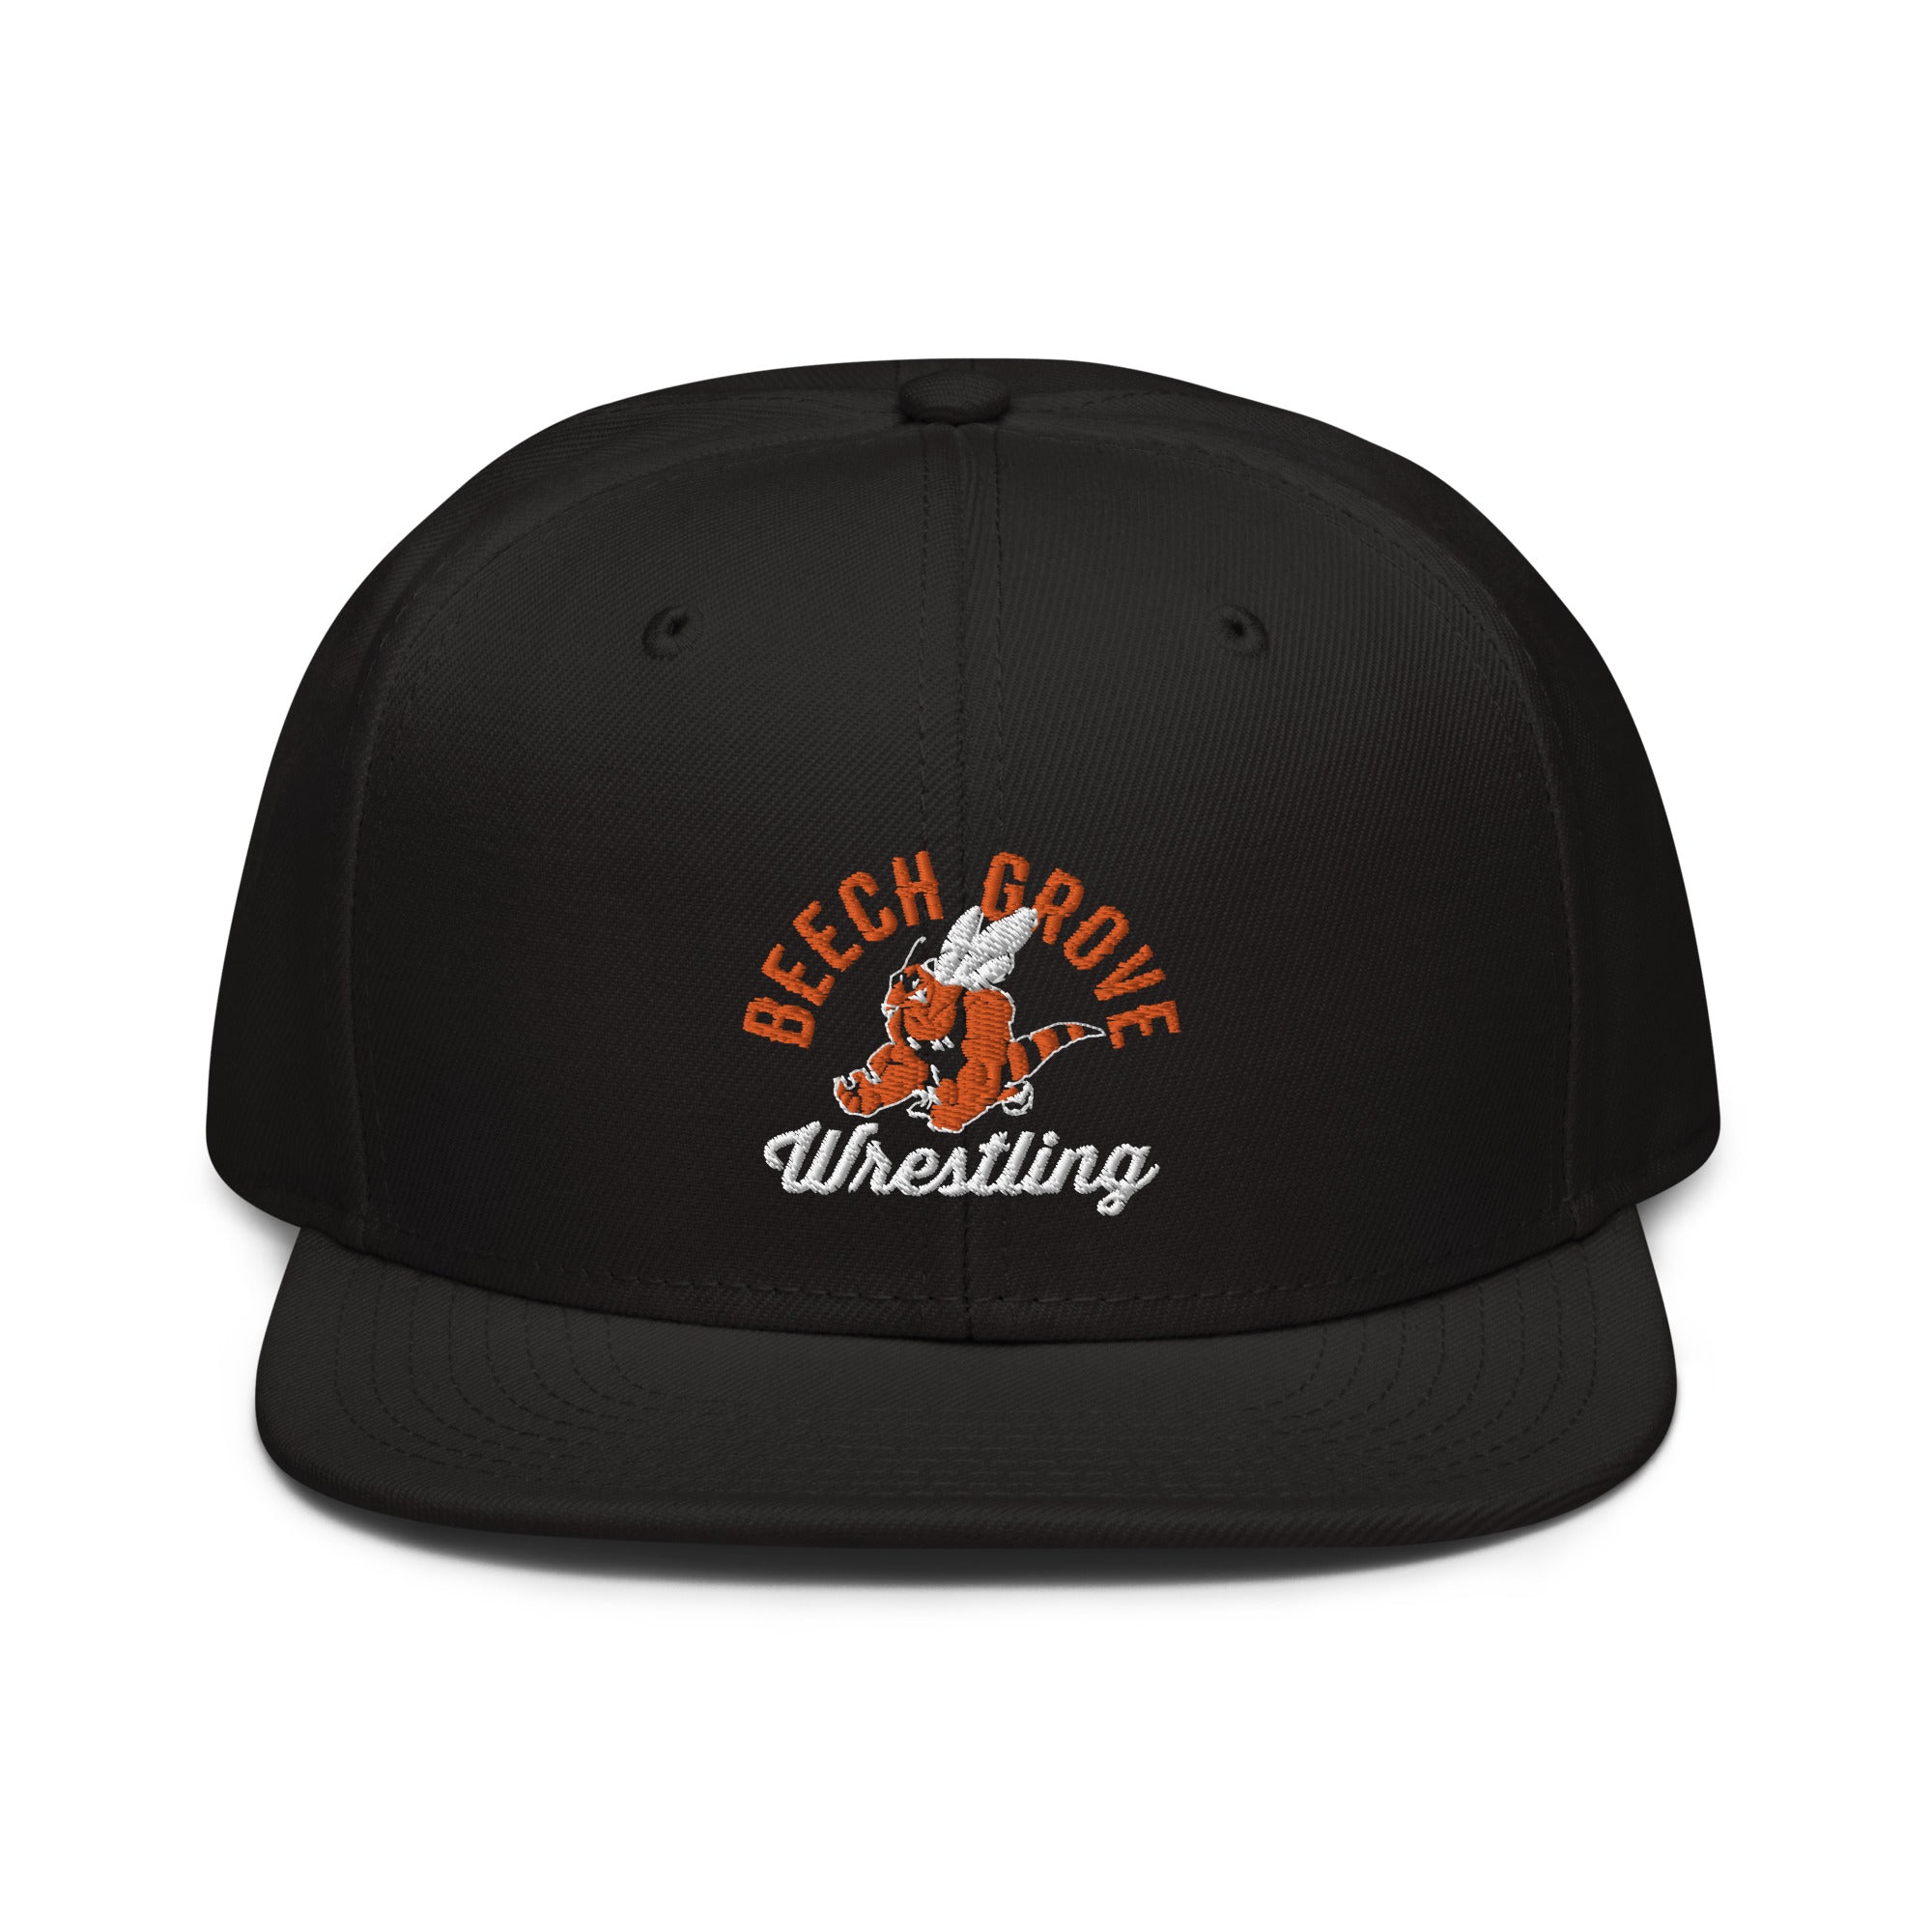 Beech Grove Wrestling Snapback Hat